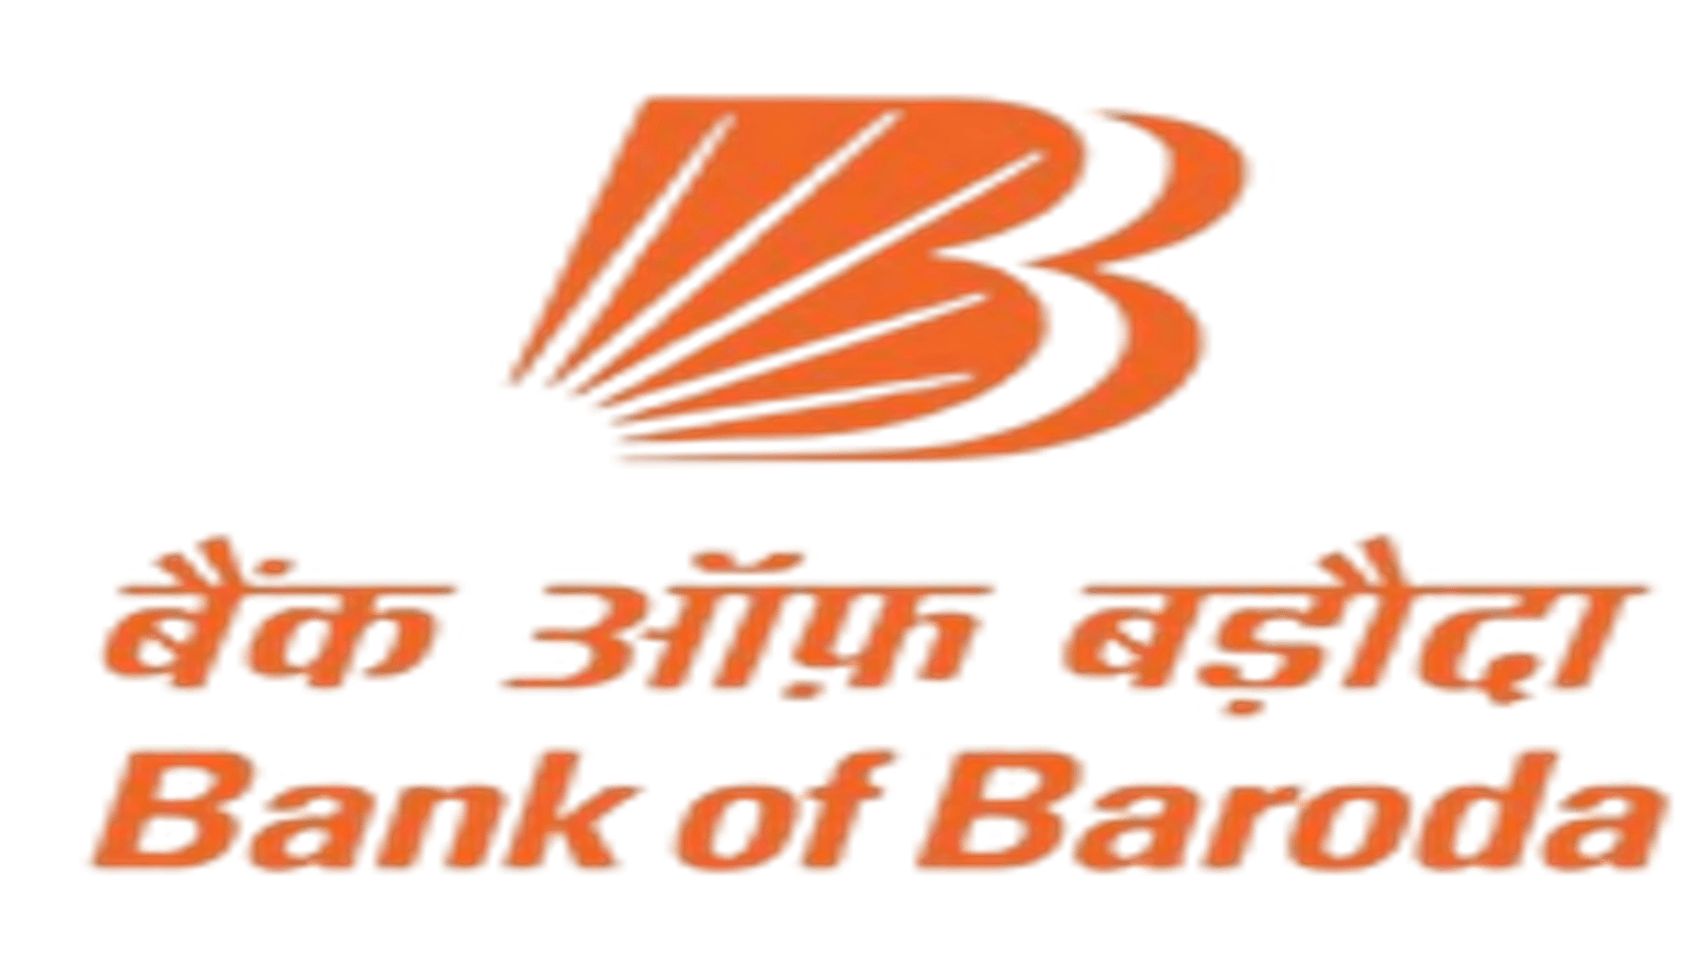 535 Bank Of Baroda Reviews | bankofbaroda.in @ PissedConsumer